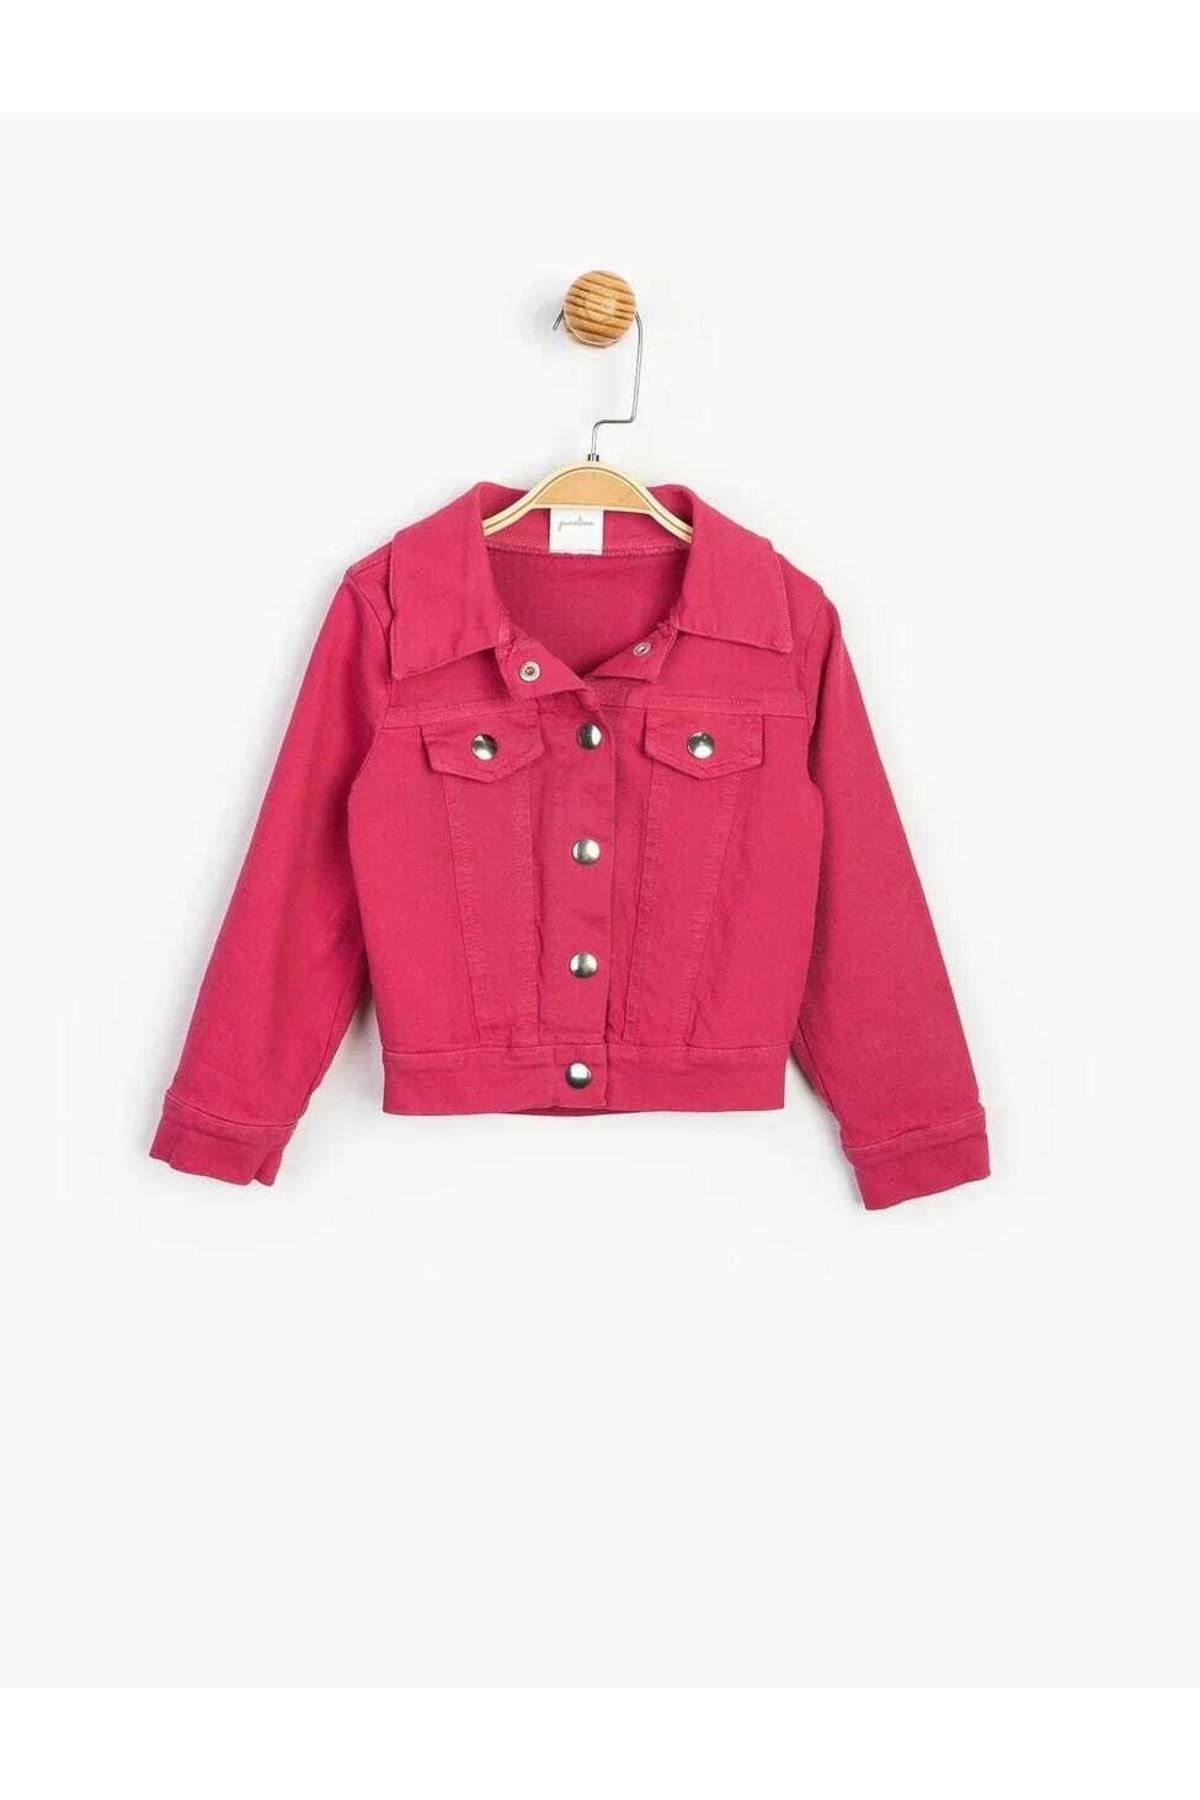 Panolino Yazlık Kız Çocuk Pamuk Pembe Renk Denim Kot Jeans Ceket